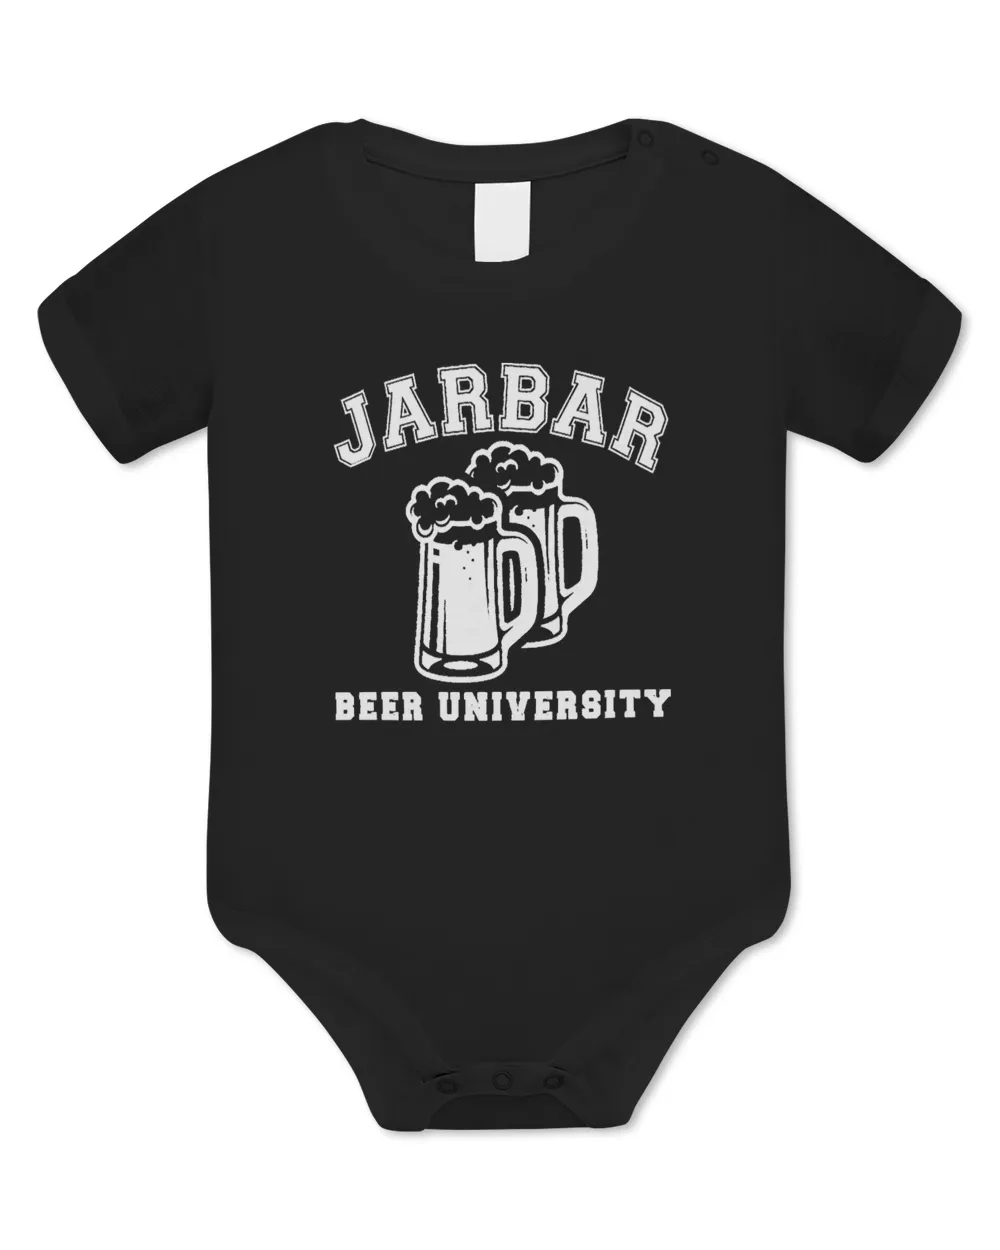 Beer University T- Shirt Jarbar beer university T- Shirt